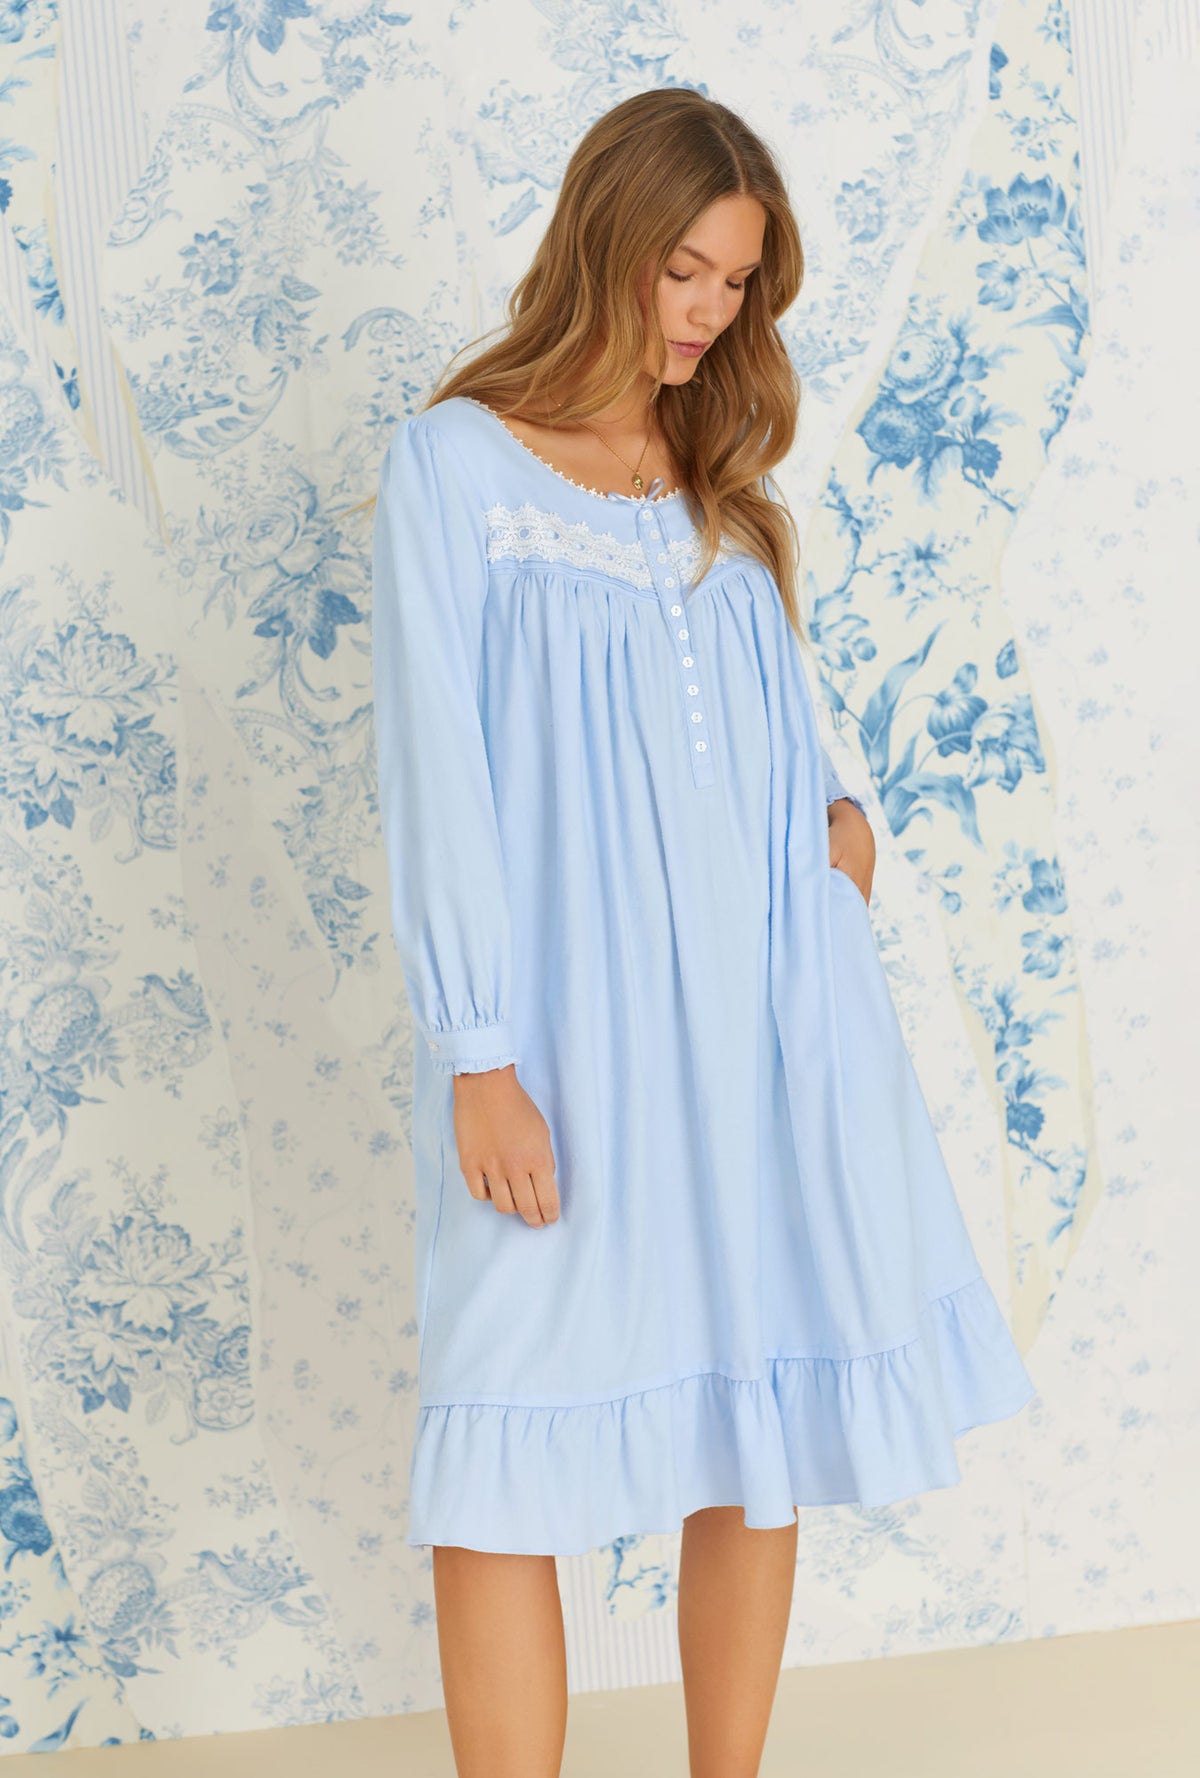 A lady wearing long sleeve dream blue rayon cotton flannel waltz nightgown.